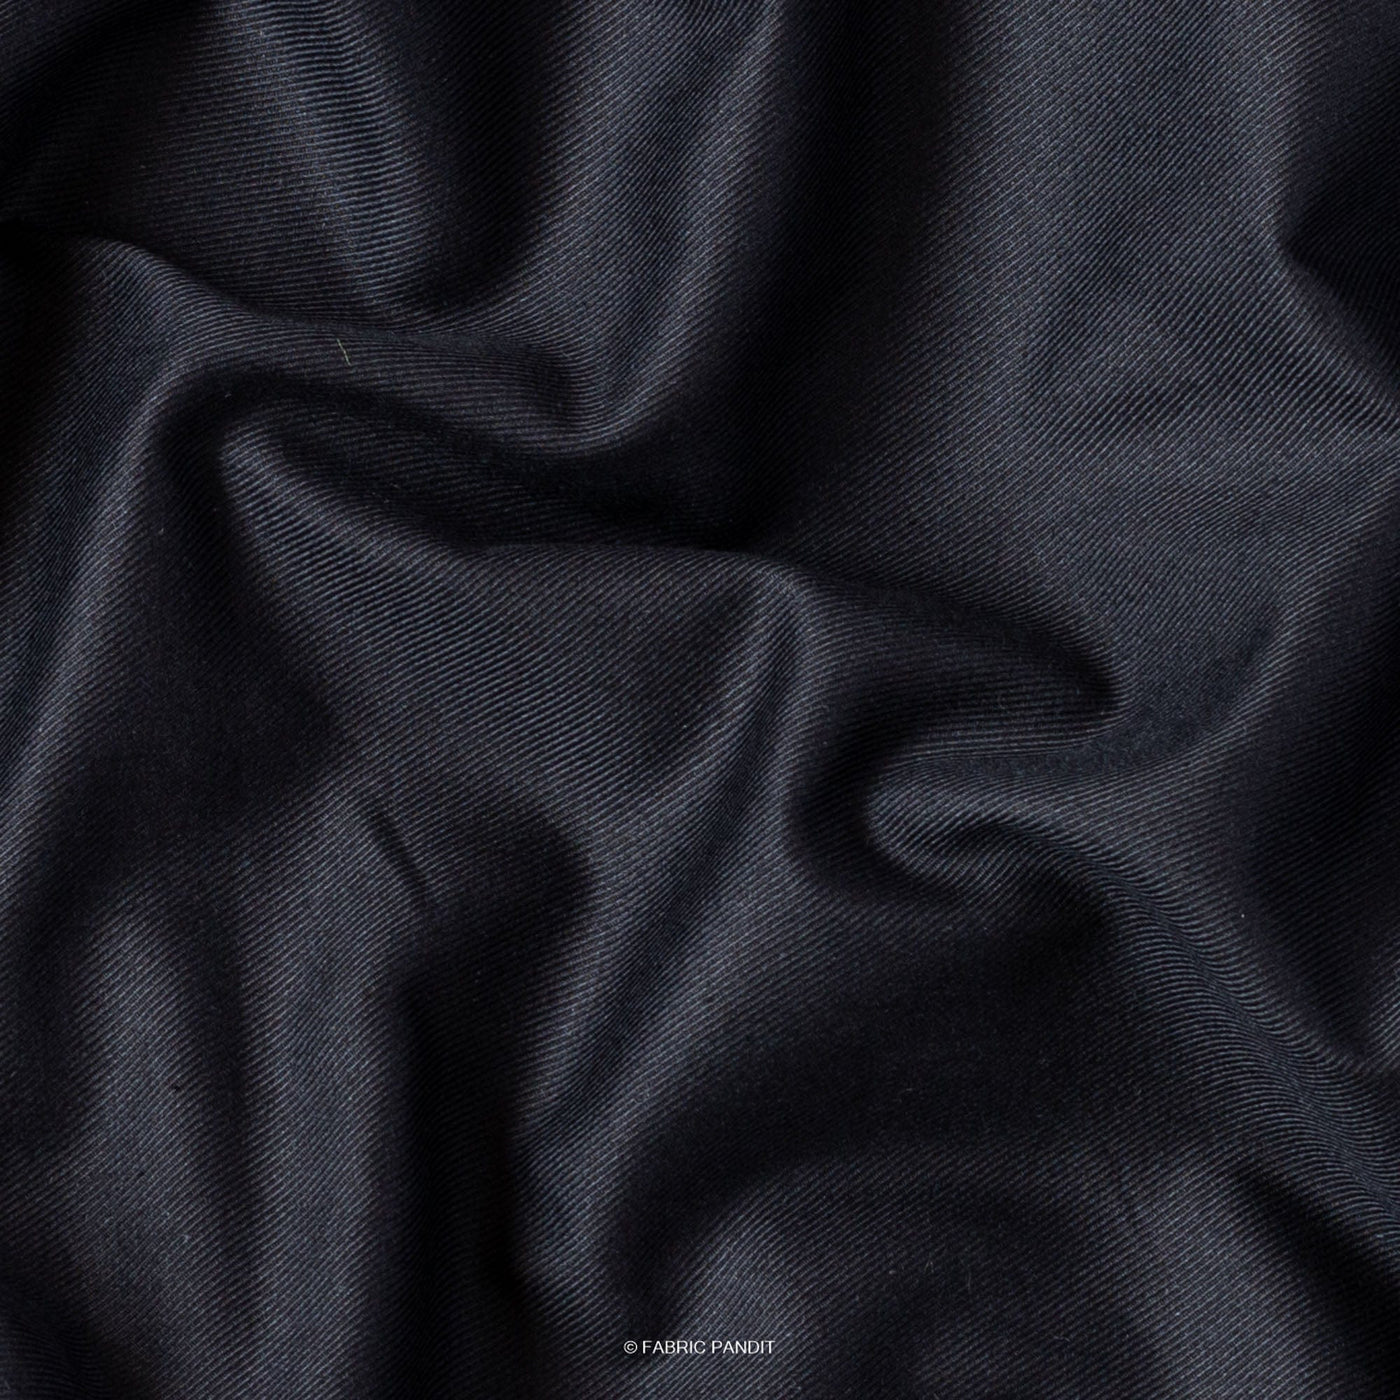 Fabric Pandit Shirt Bold Black Pure Twill Cotton Unstitched Men's Shirt Piece (Width 58 Inch | 1.60 Meters)